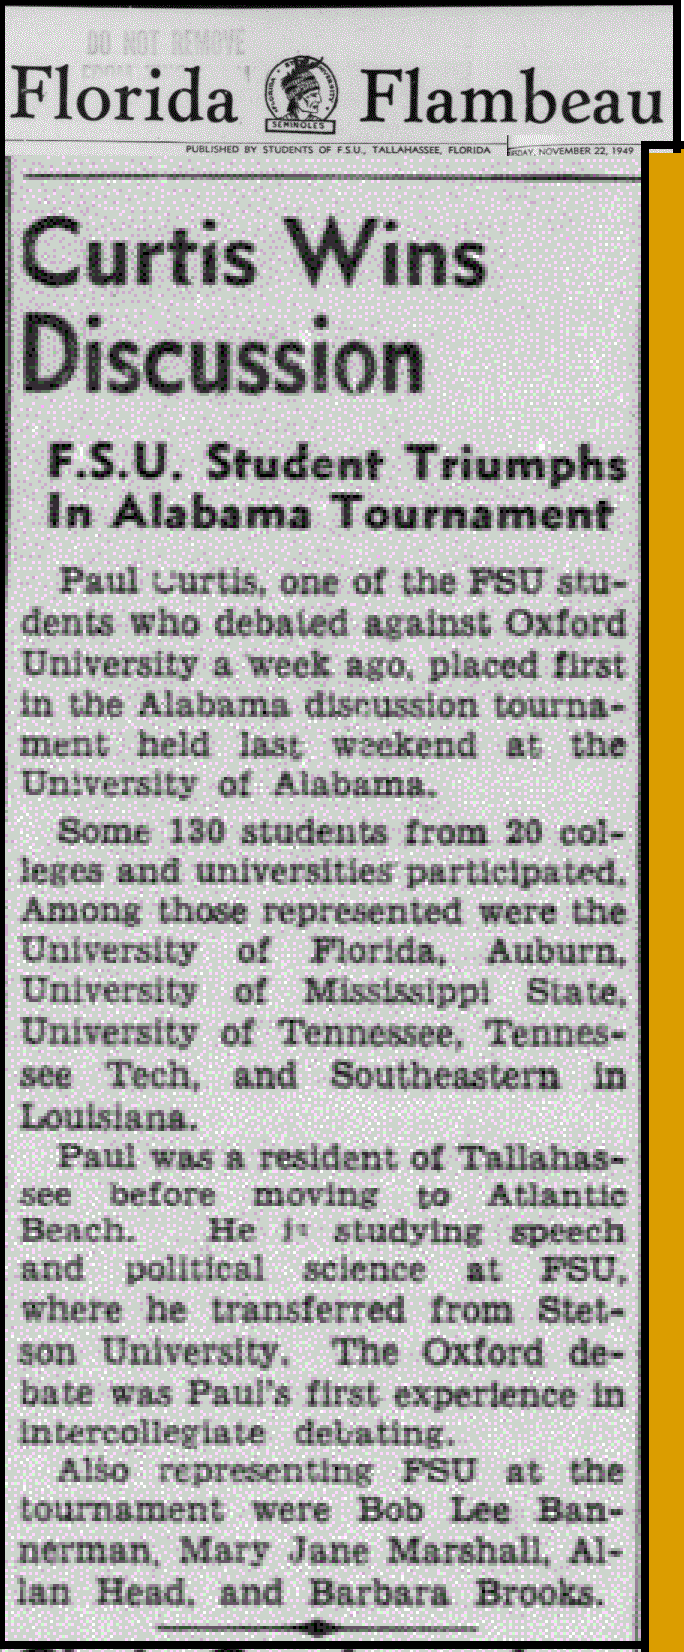 "Curtis Wins Discussion: F.S.U. Student Triumphs at Alabama Tournament"